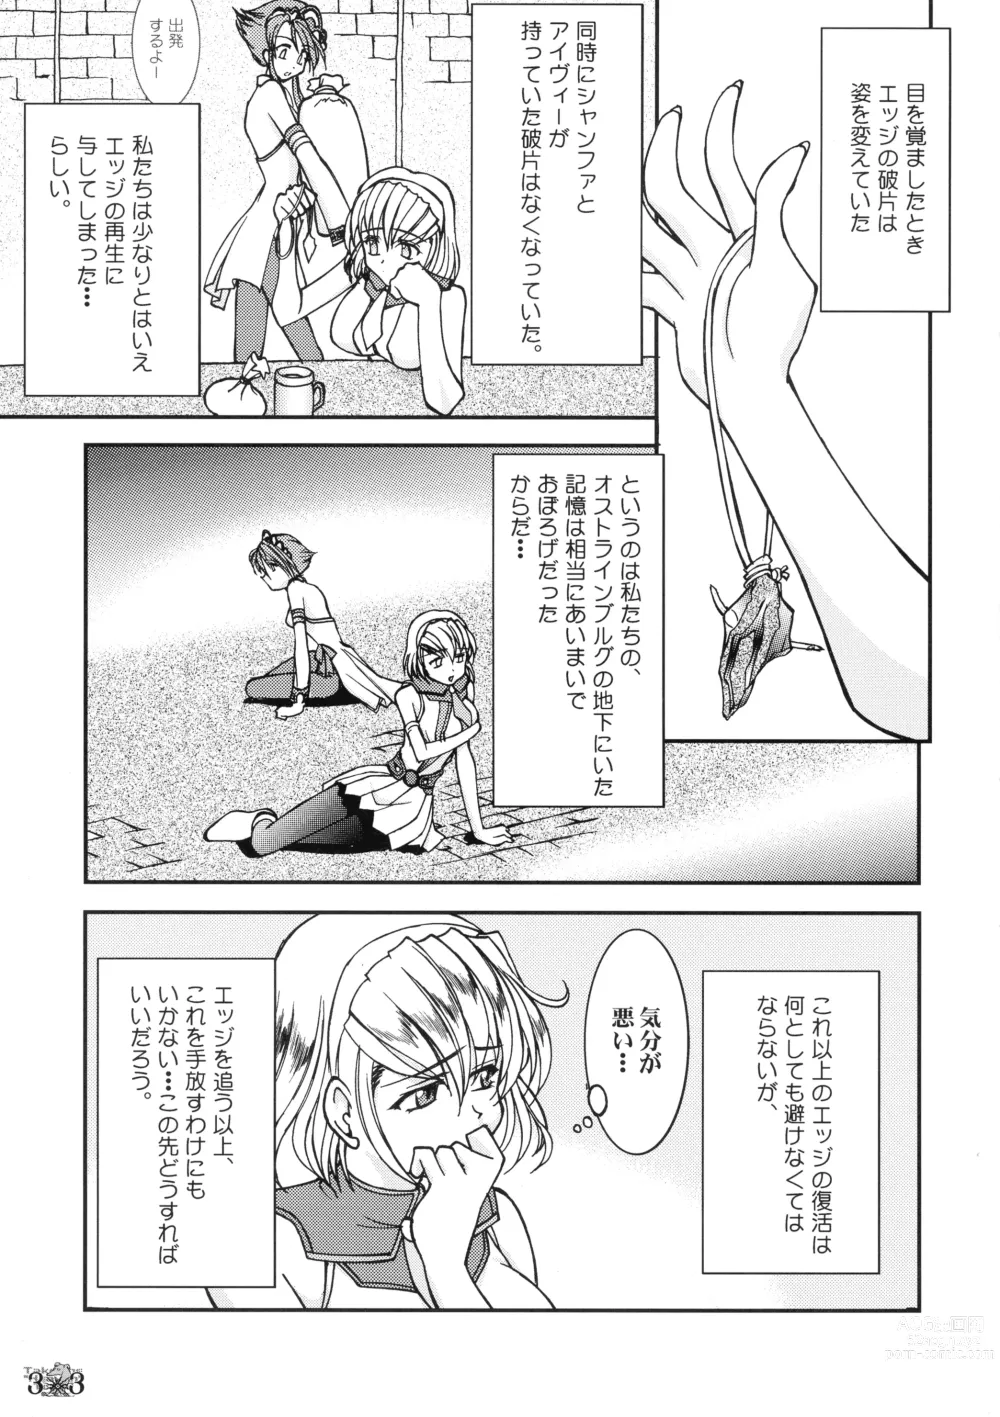 Page 32 of doujinshi Take the Heaven